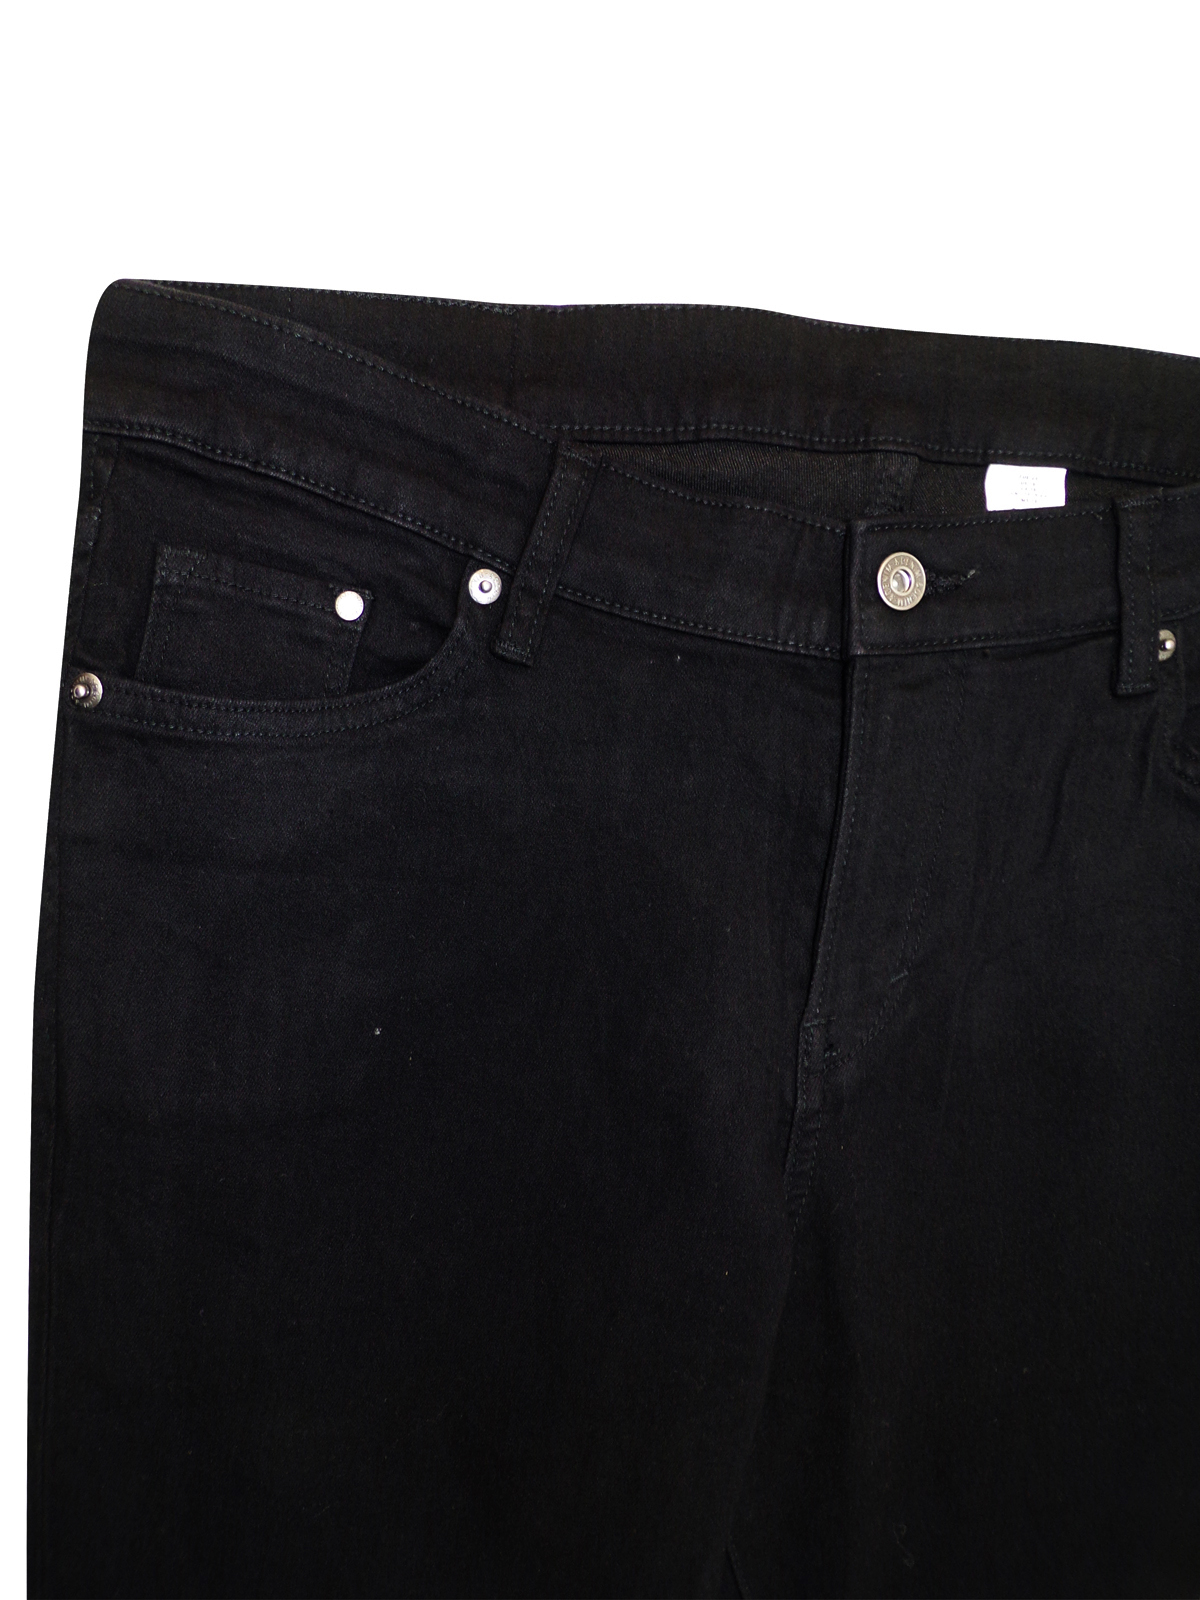 H&M BLACK Skinny Fit Stretch Denim Jeans - Plus Size 16 to 26